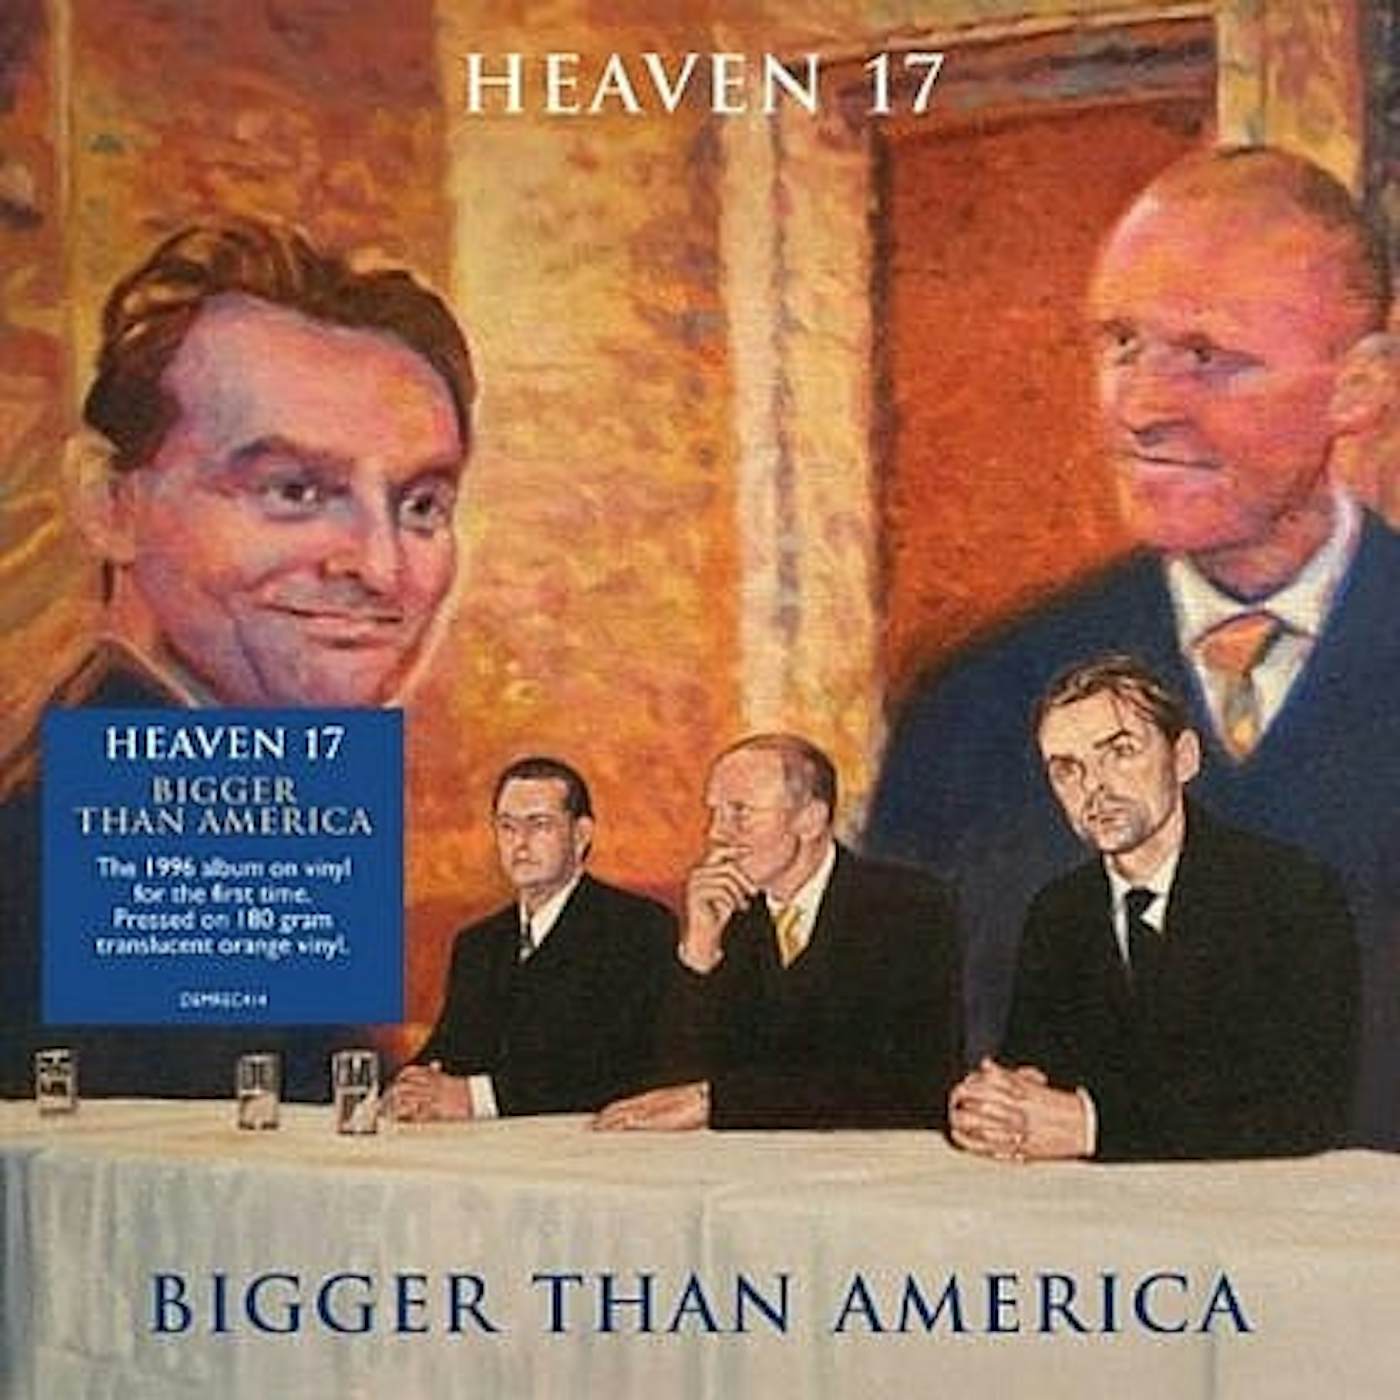 Heaven 17  LP Vinyl Record - Bigger than America (RSD 20. 19 )